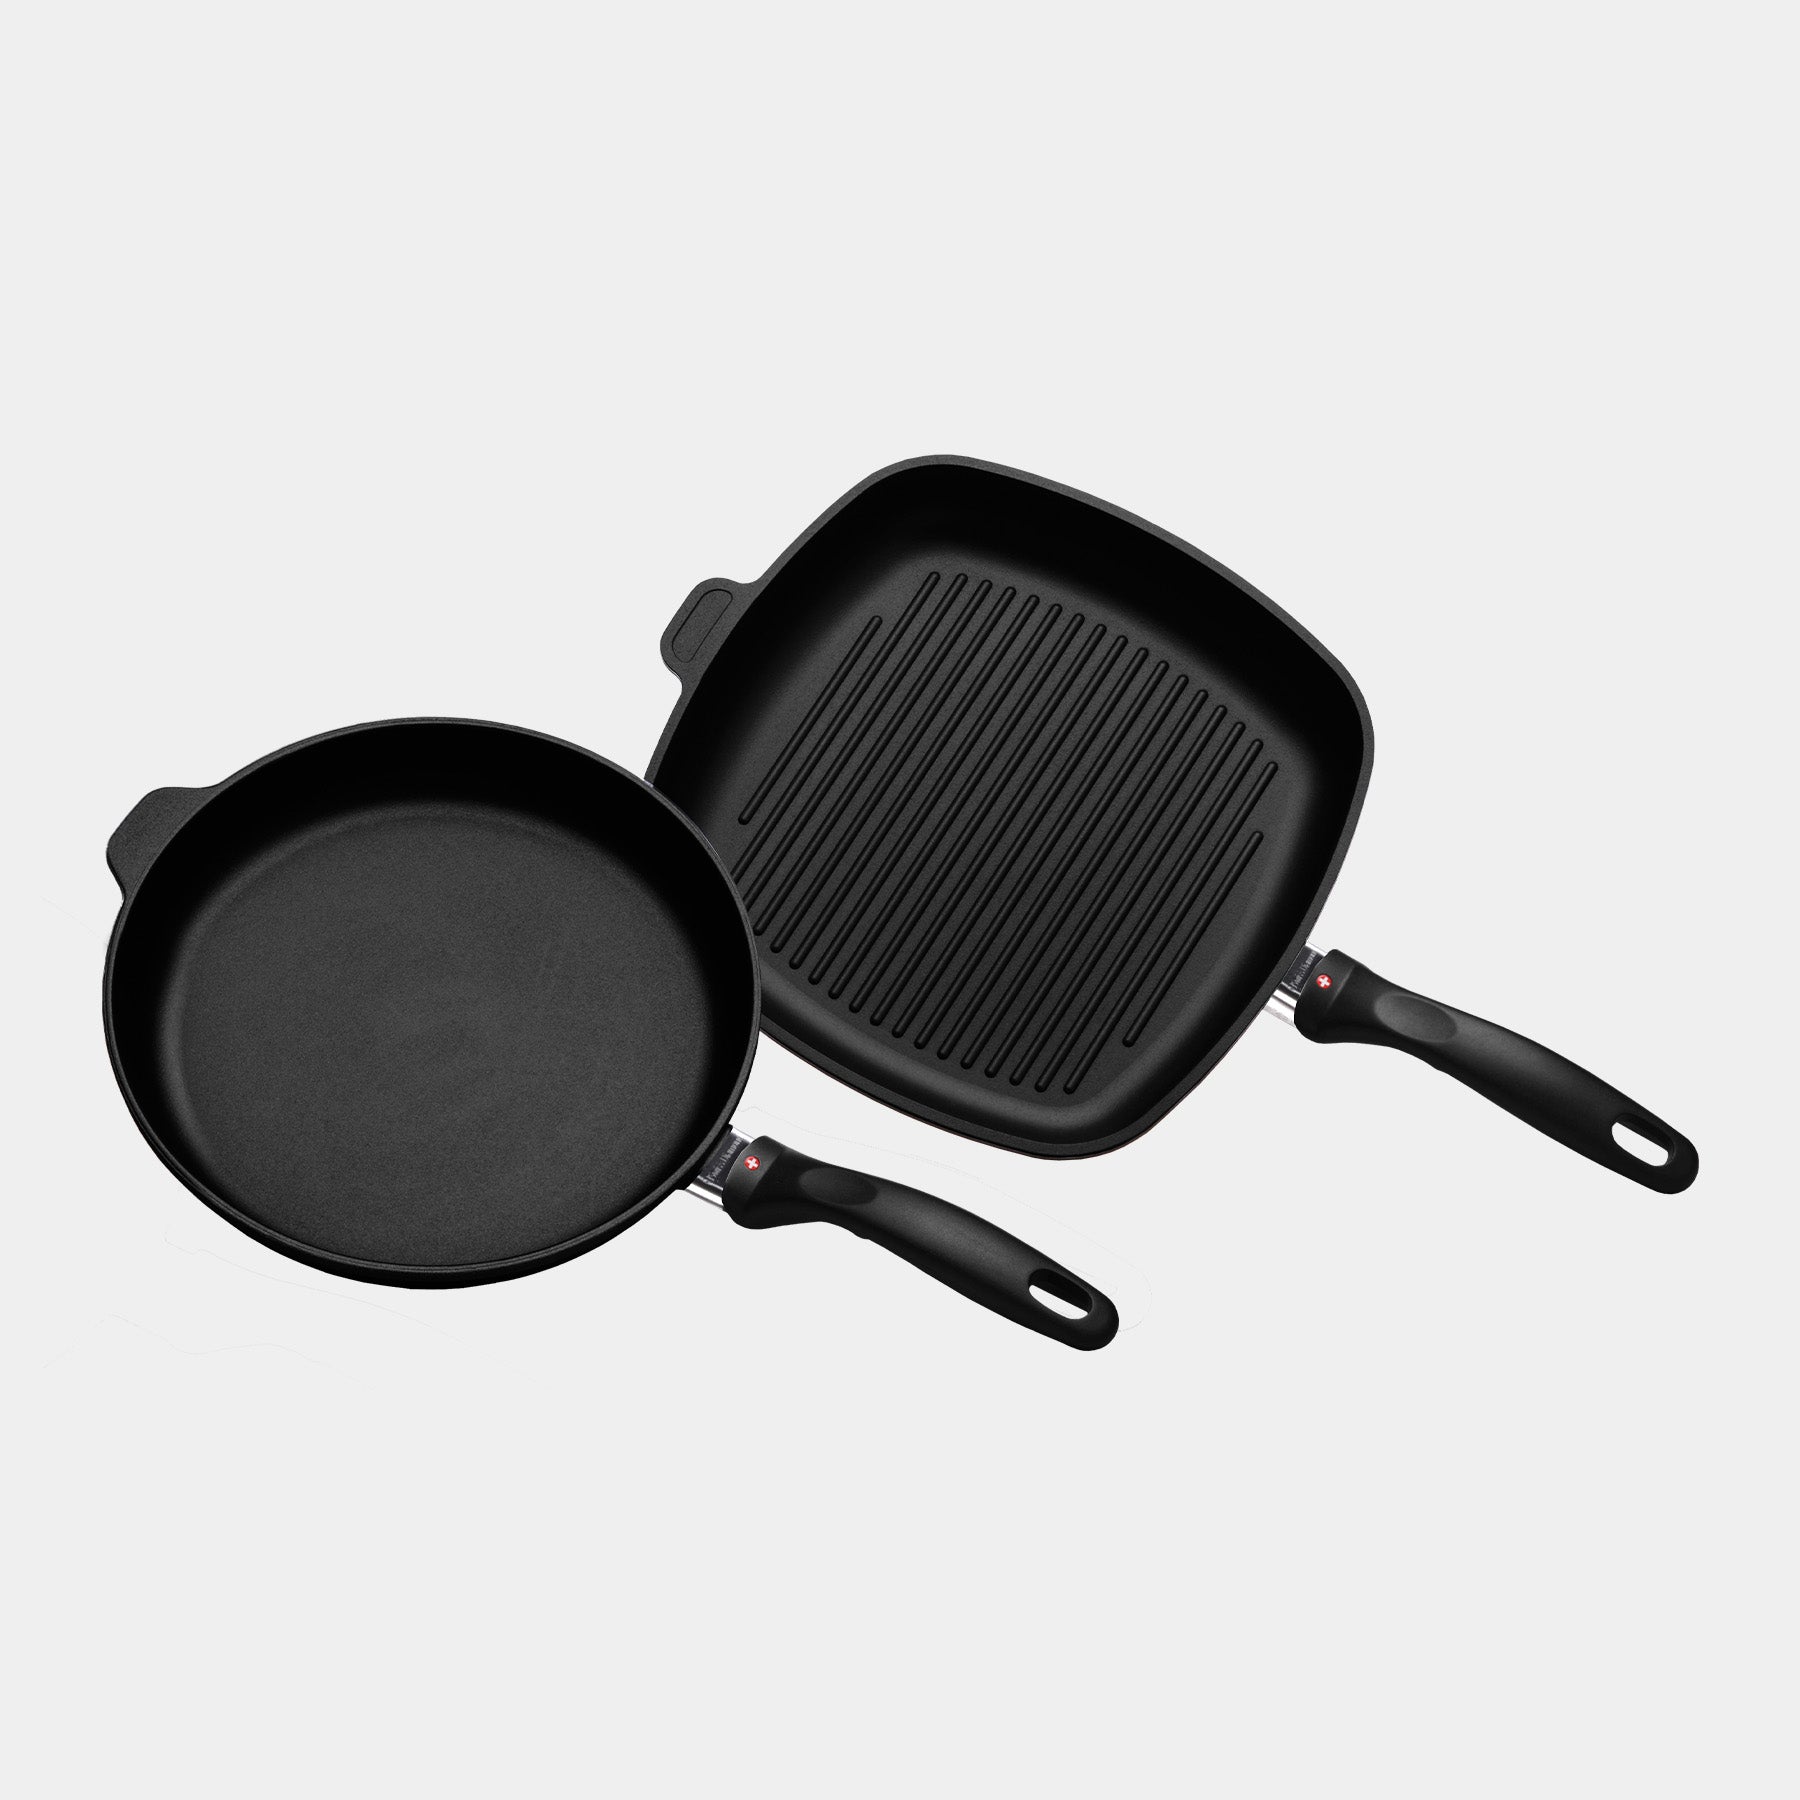 XD Nonstick 2-Piece Set - Fry Pan & Grill Pan